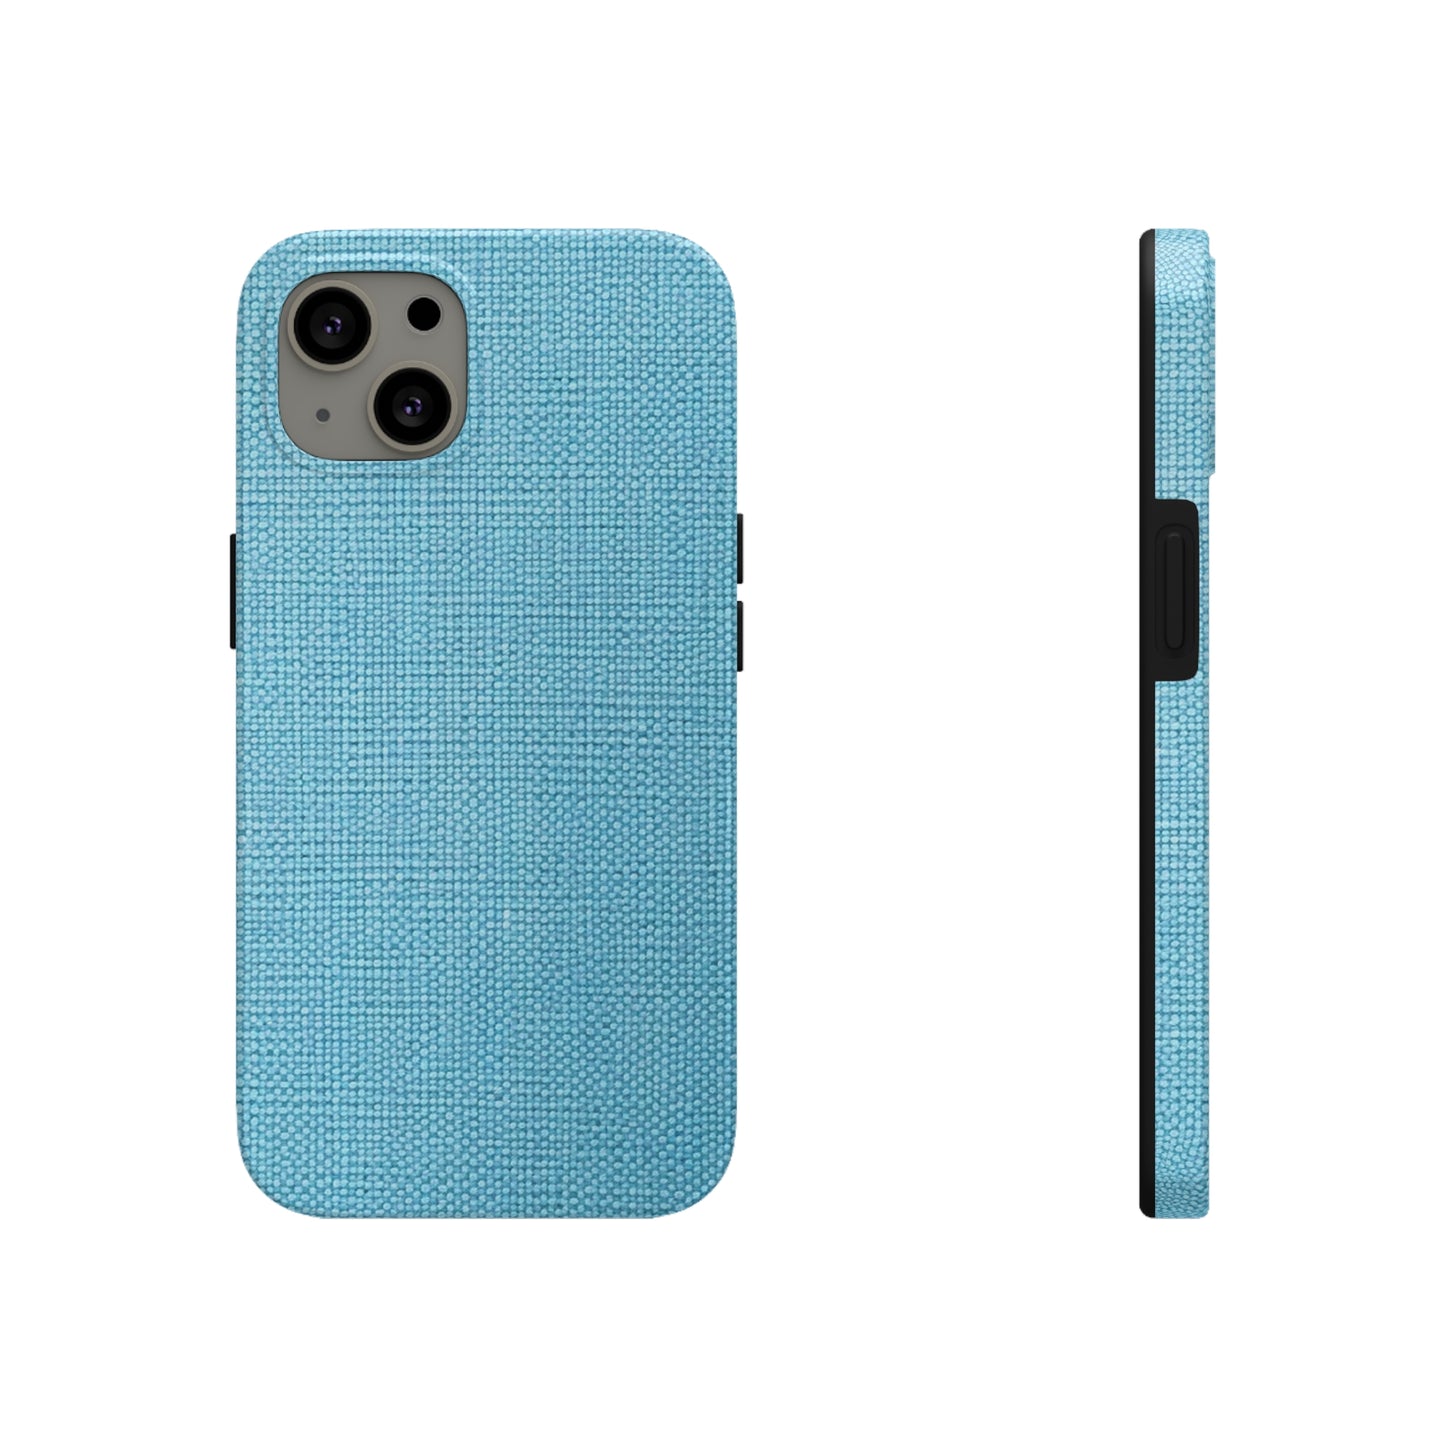 Bright Aqua Teal: Denim-Inspired Refreshing Blue Summer Fabric - Tough Phone Cases